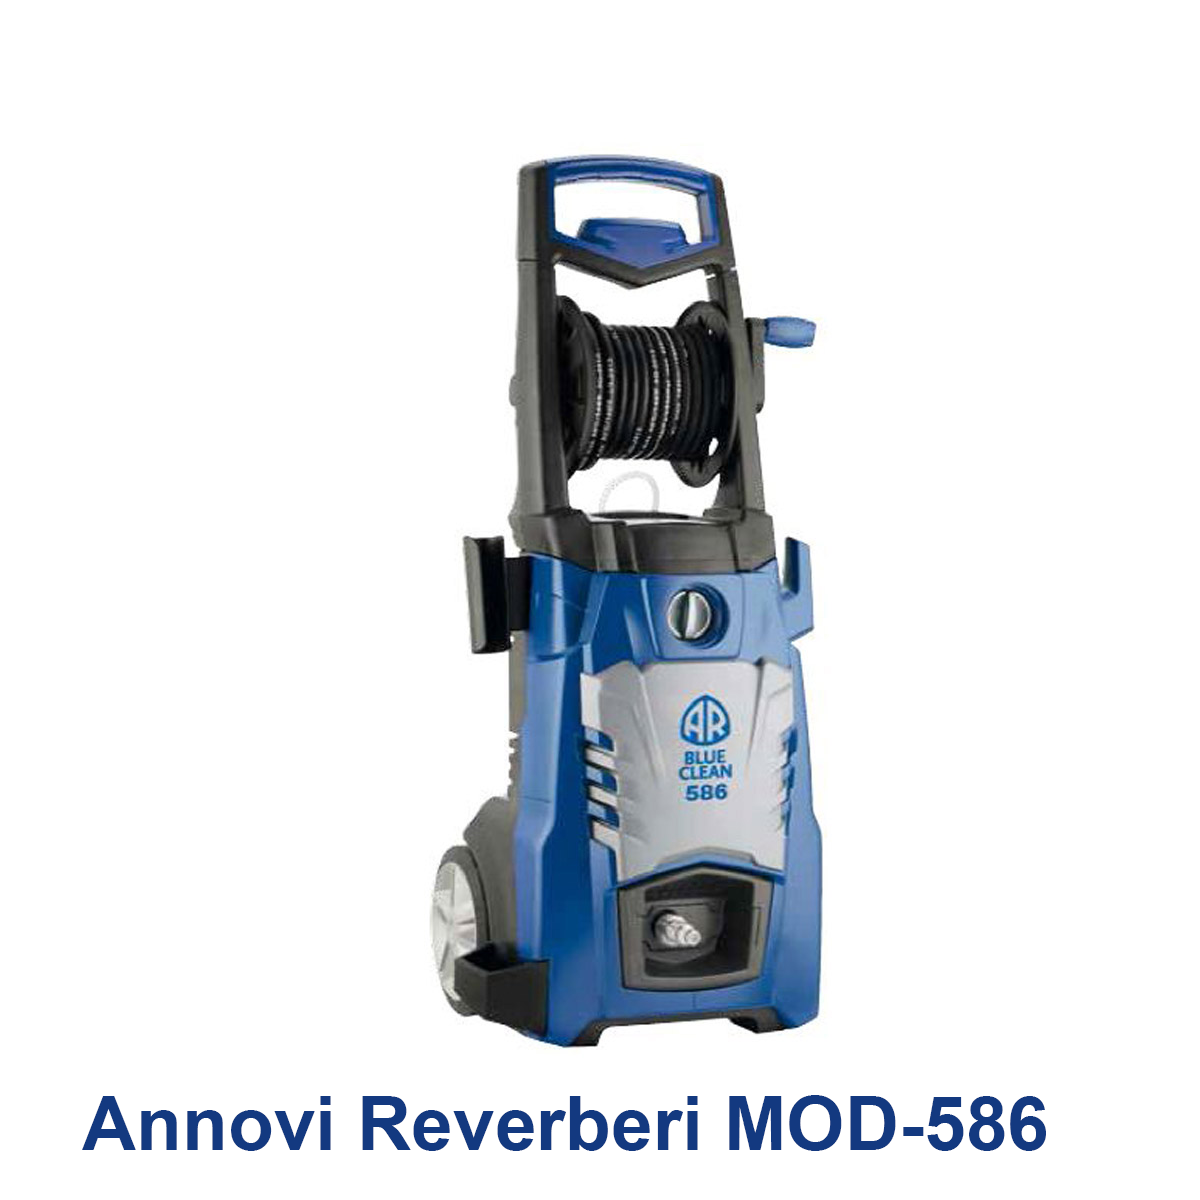 Annovi-Reverberi-MOD-586